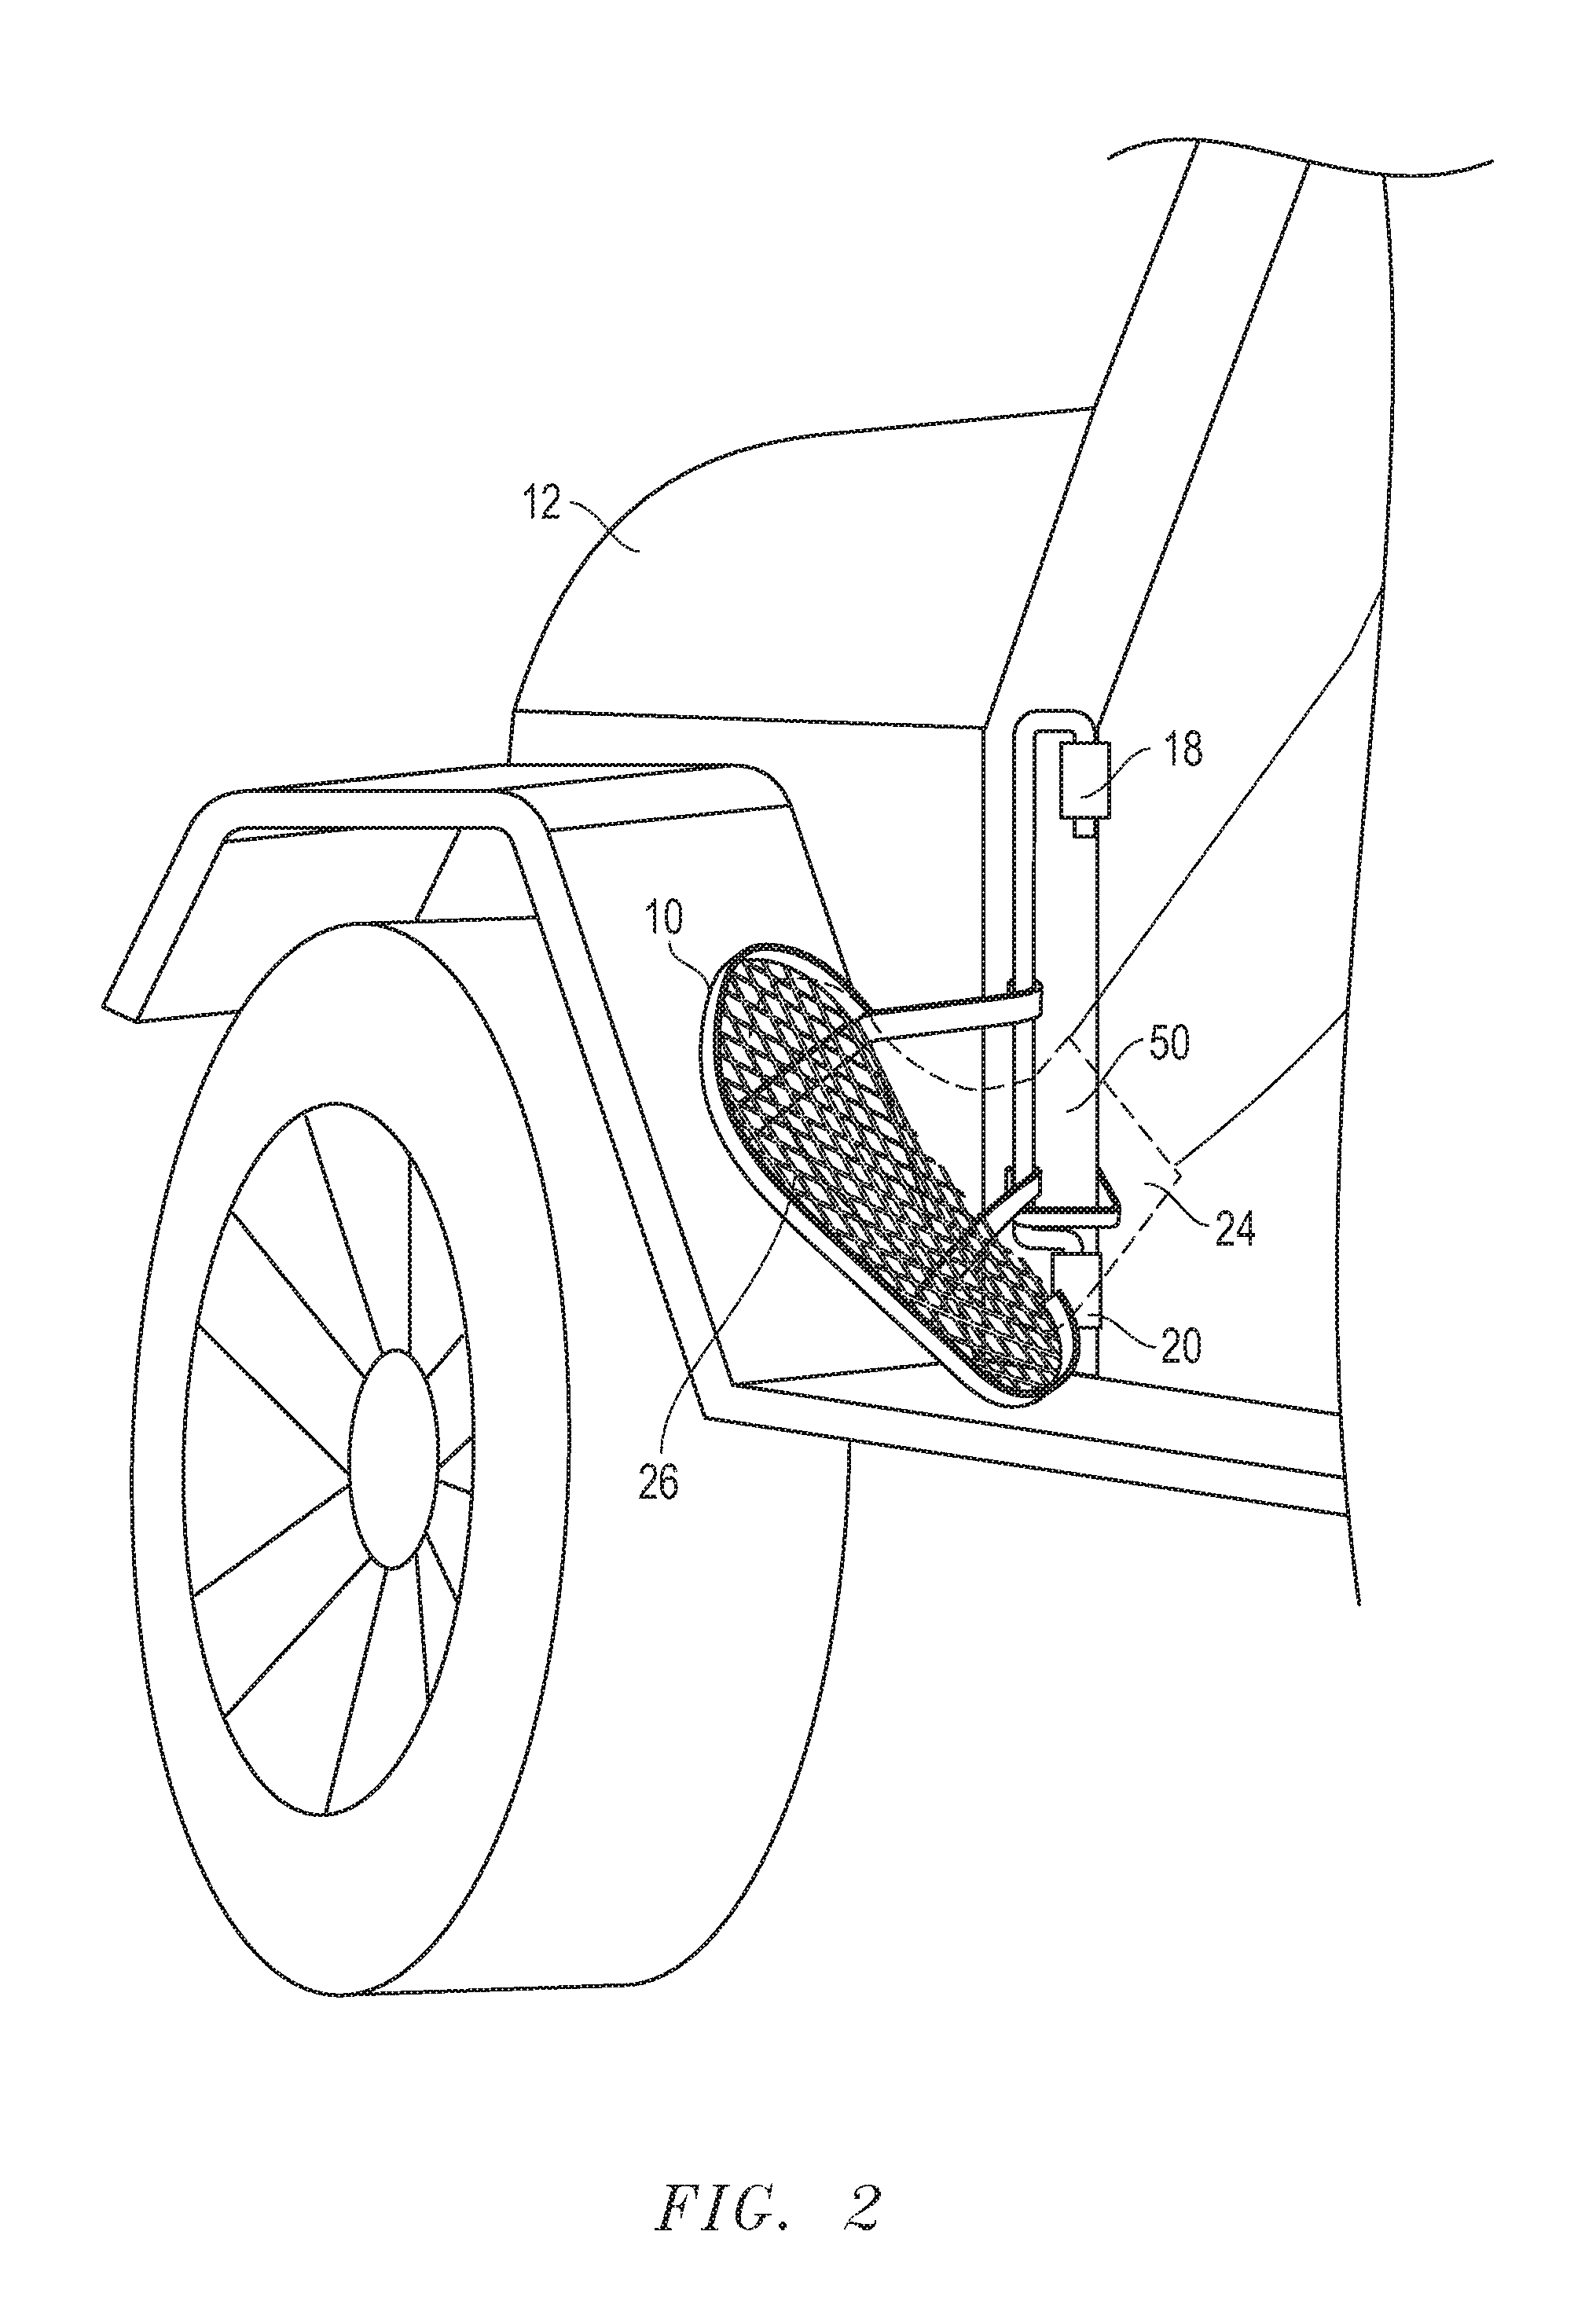 Detachable footrest for a vehicle